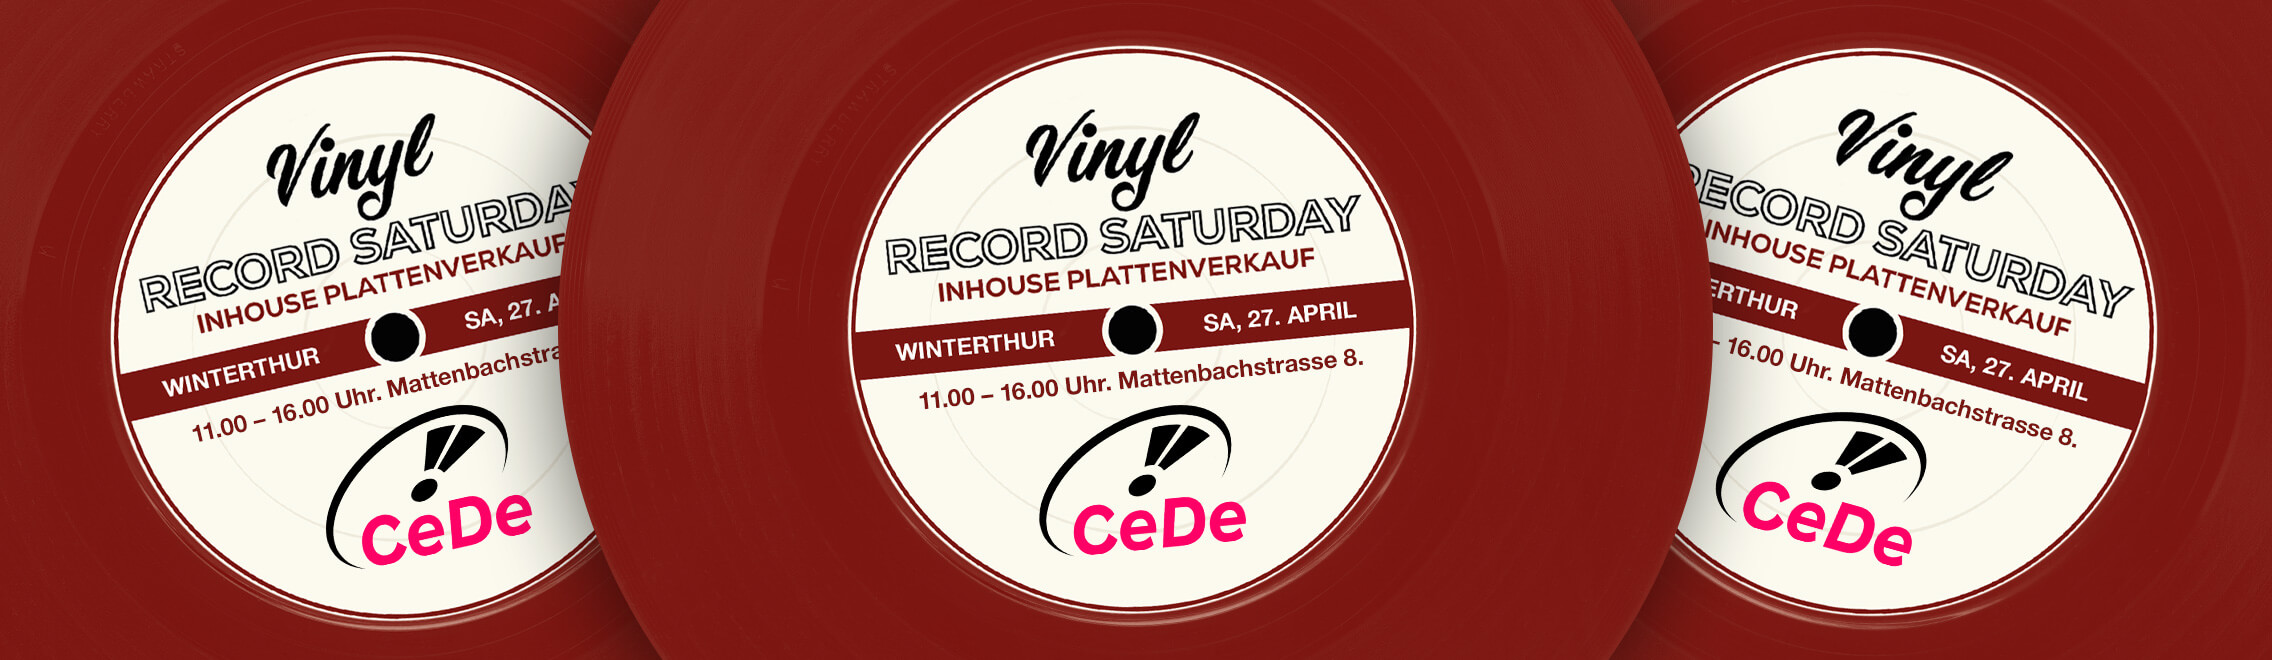 Vinyl Record Saturday